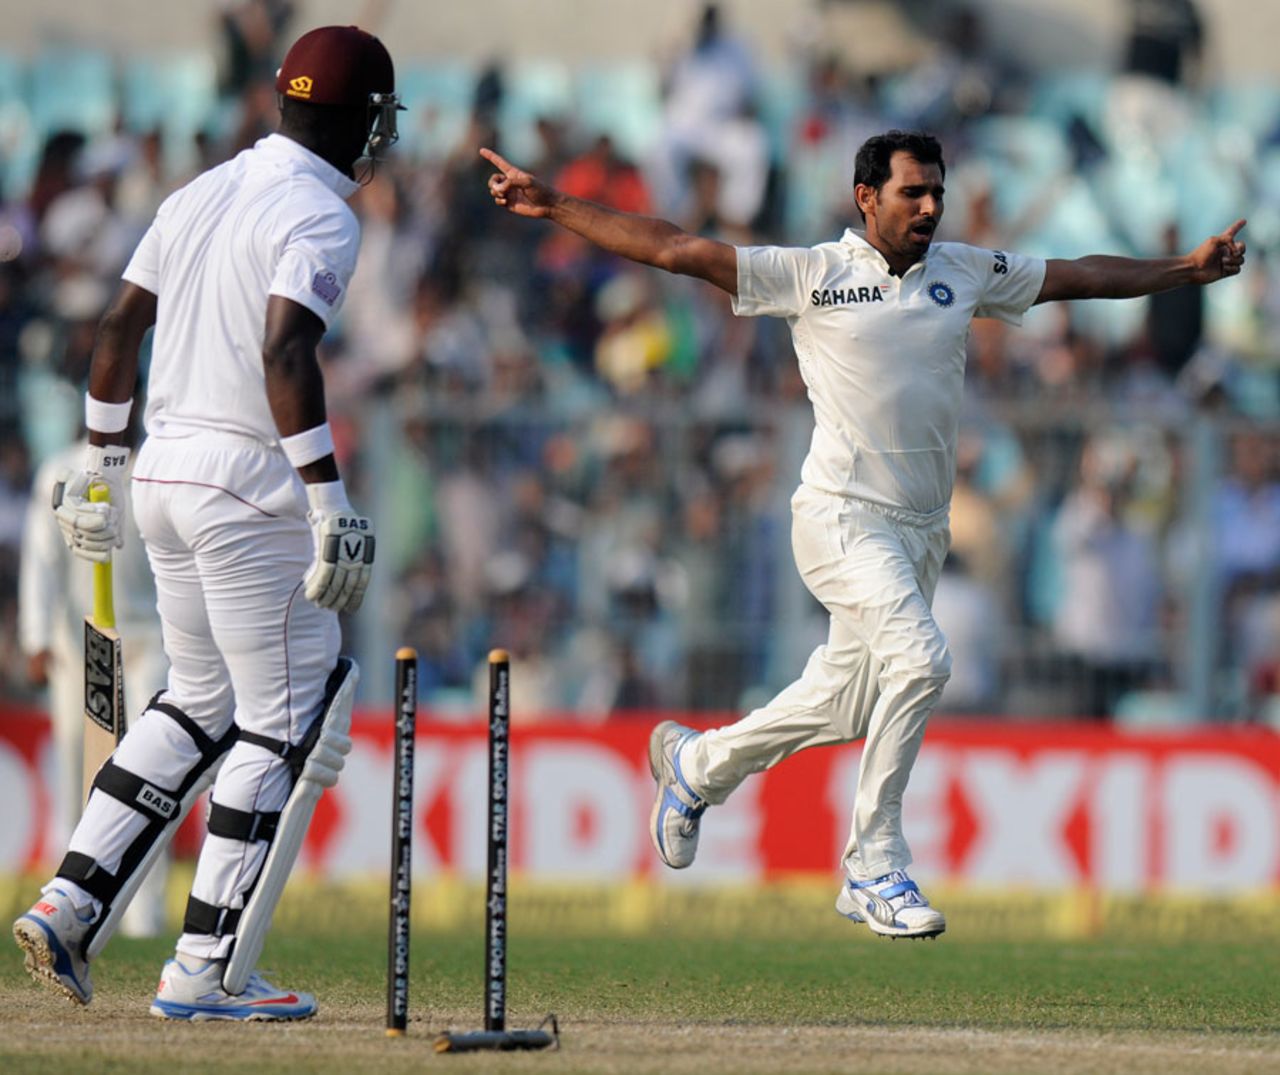 Mohammed Shami takes off after bowling Darren Sammy, India v West Indies, 1st Test, Kolkata, 3rd day, November 8, 2013